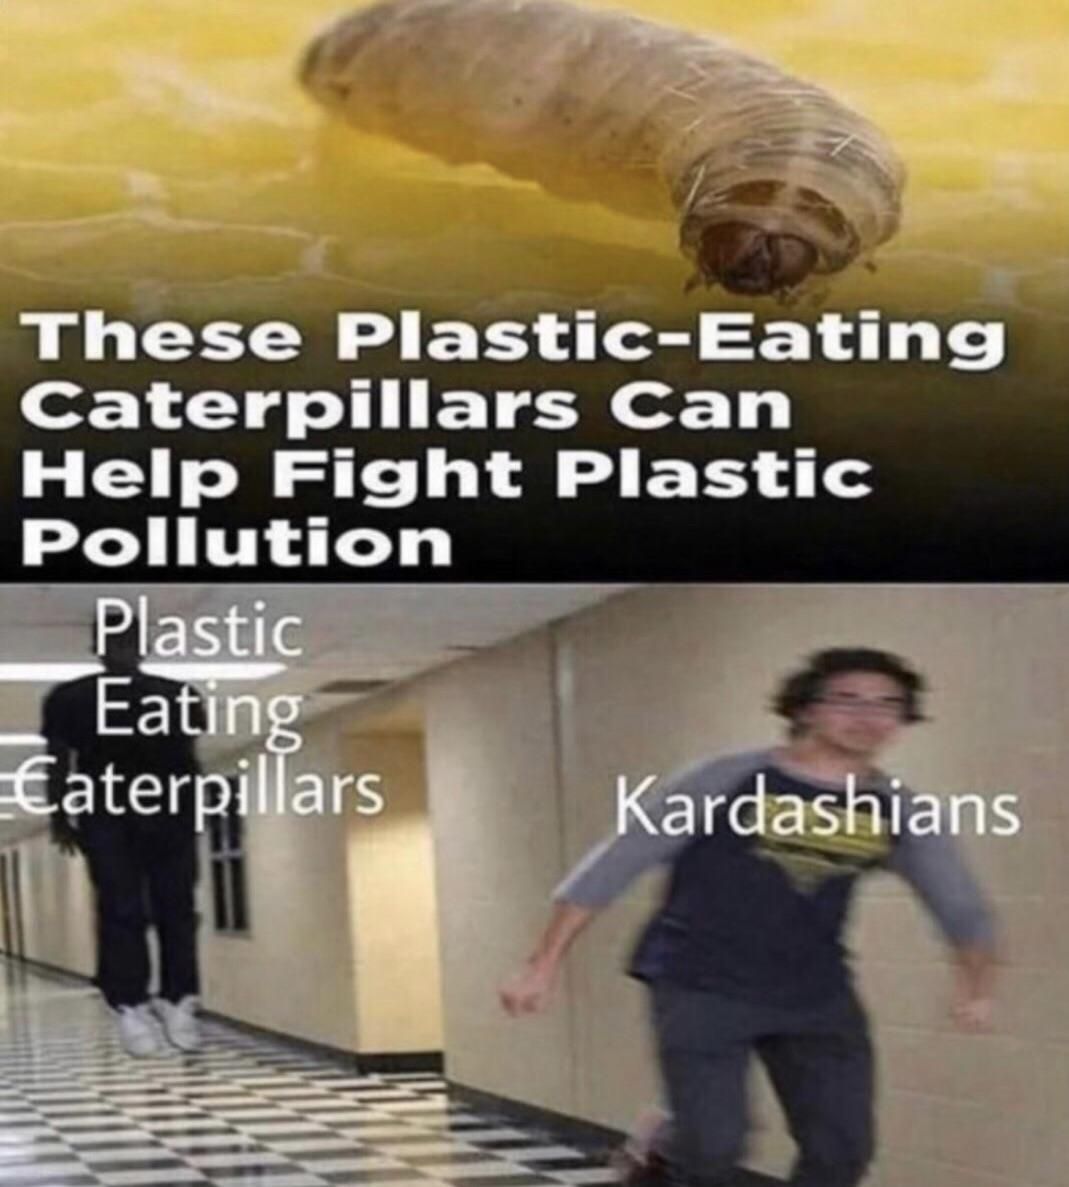 Plastic Eating Caterpillers